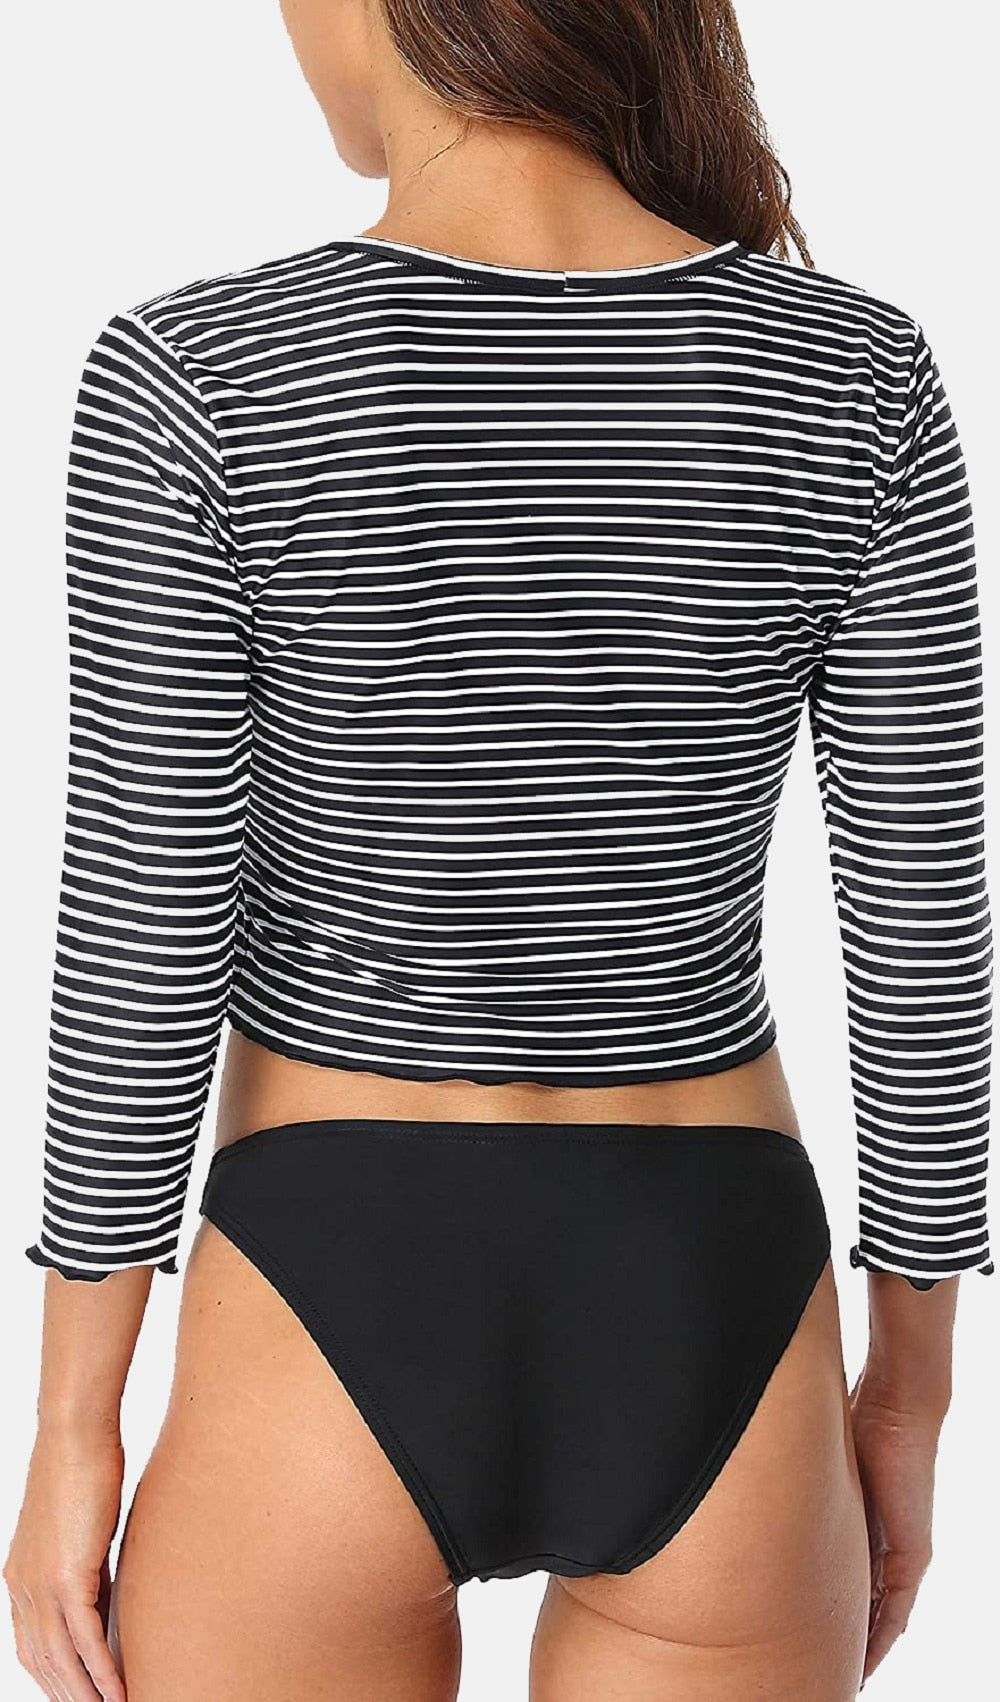 Women's Rash Guard Two Piece Swimsuits Long Sleeve Striped Swim Shirts Bikini Bottom.